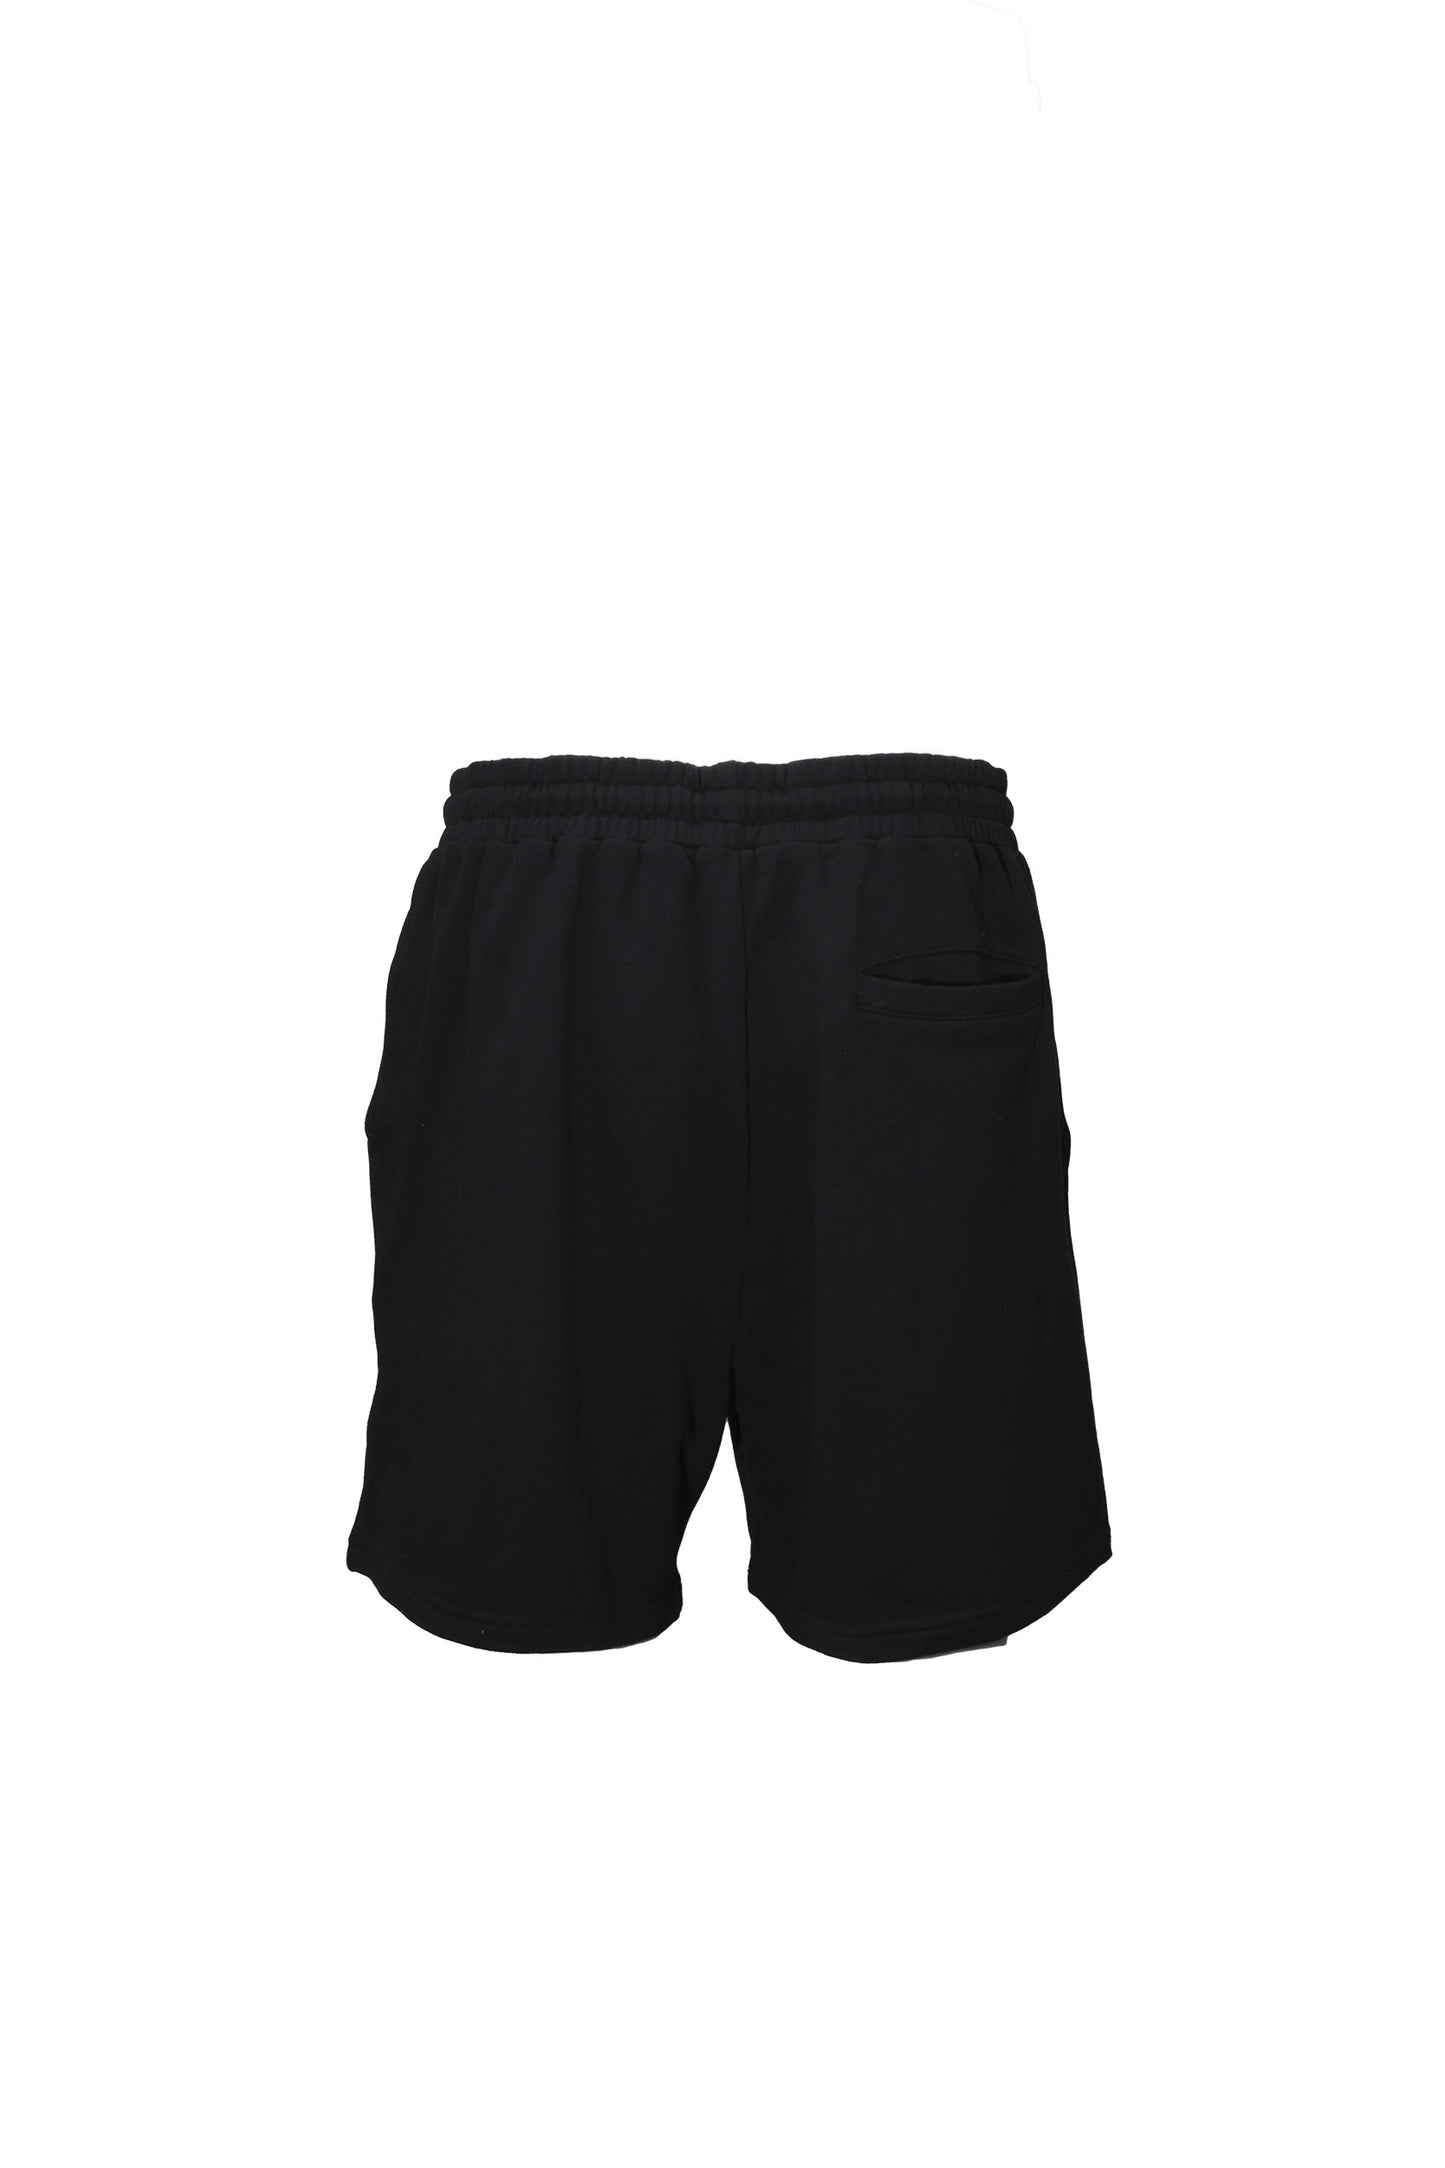 E-Zoo Fleece Shorts